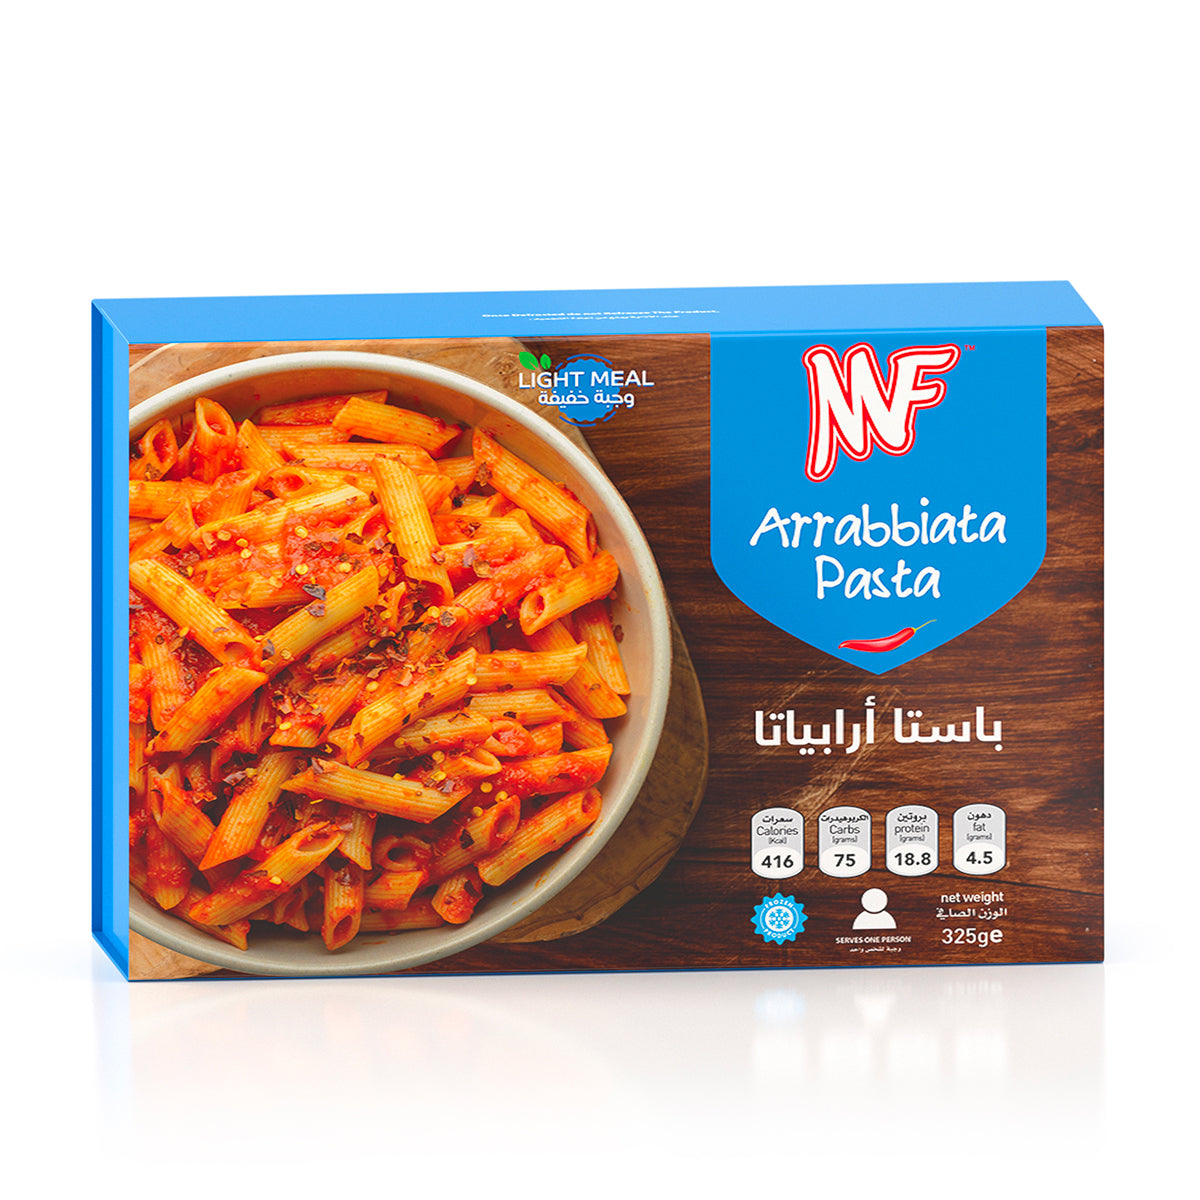 MF Arrabbiata Pasta 325g (Light Meal)